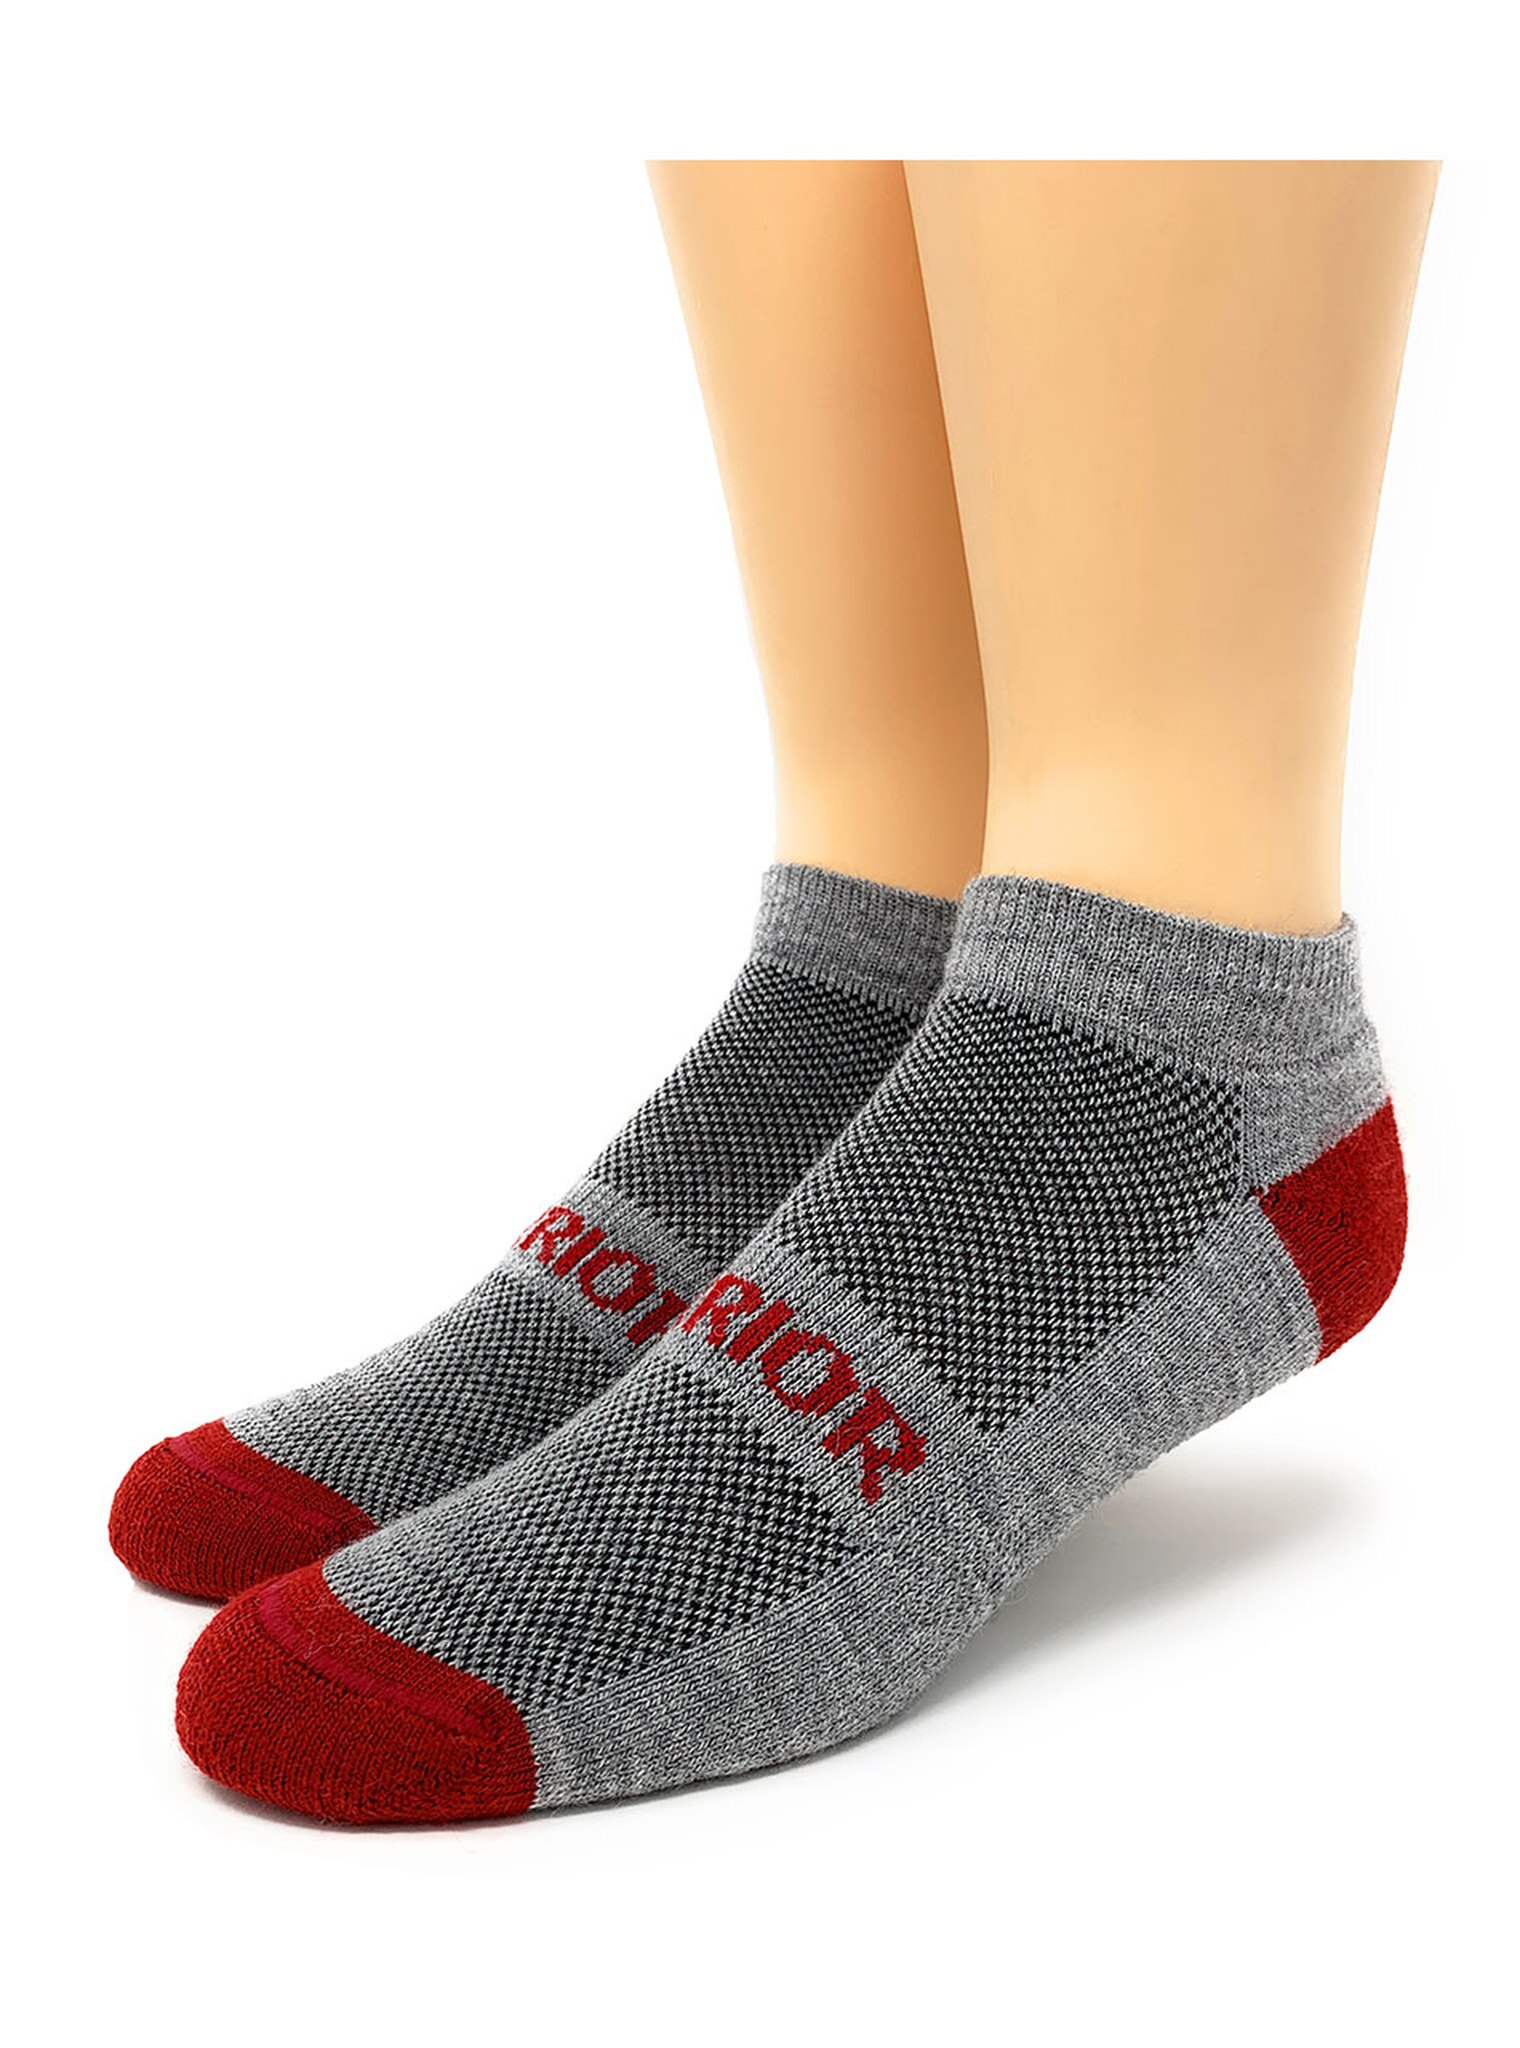 Alpaca Wool Dress Socks Designer Series Warrior Alpaca Socks Fresh Classic Rugby Stripe Sox